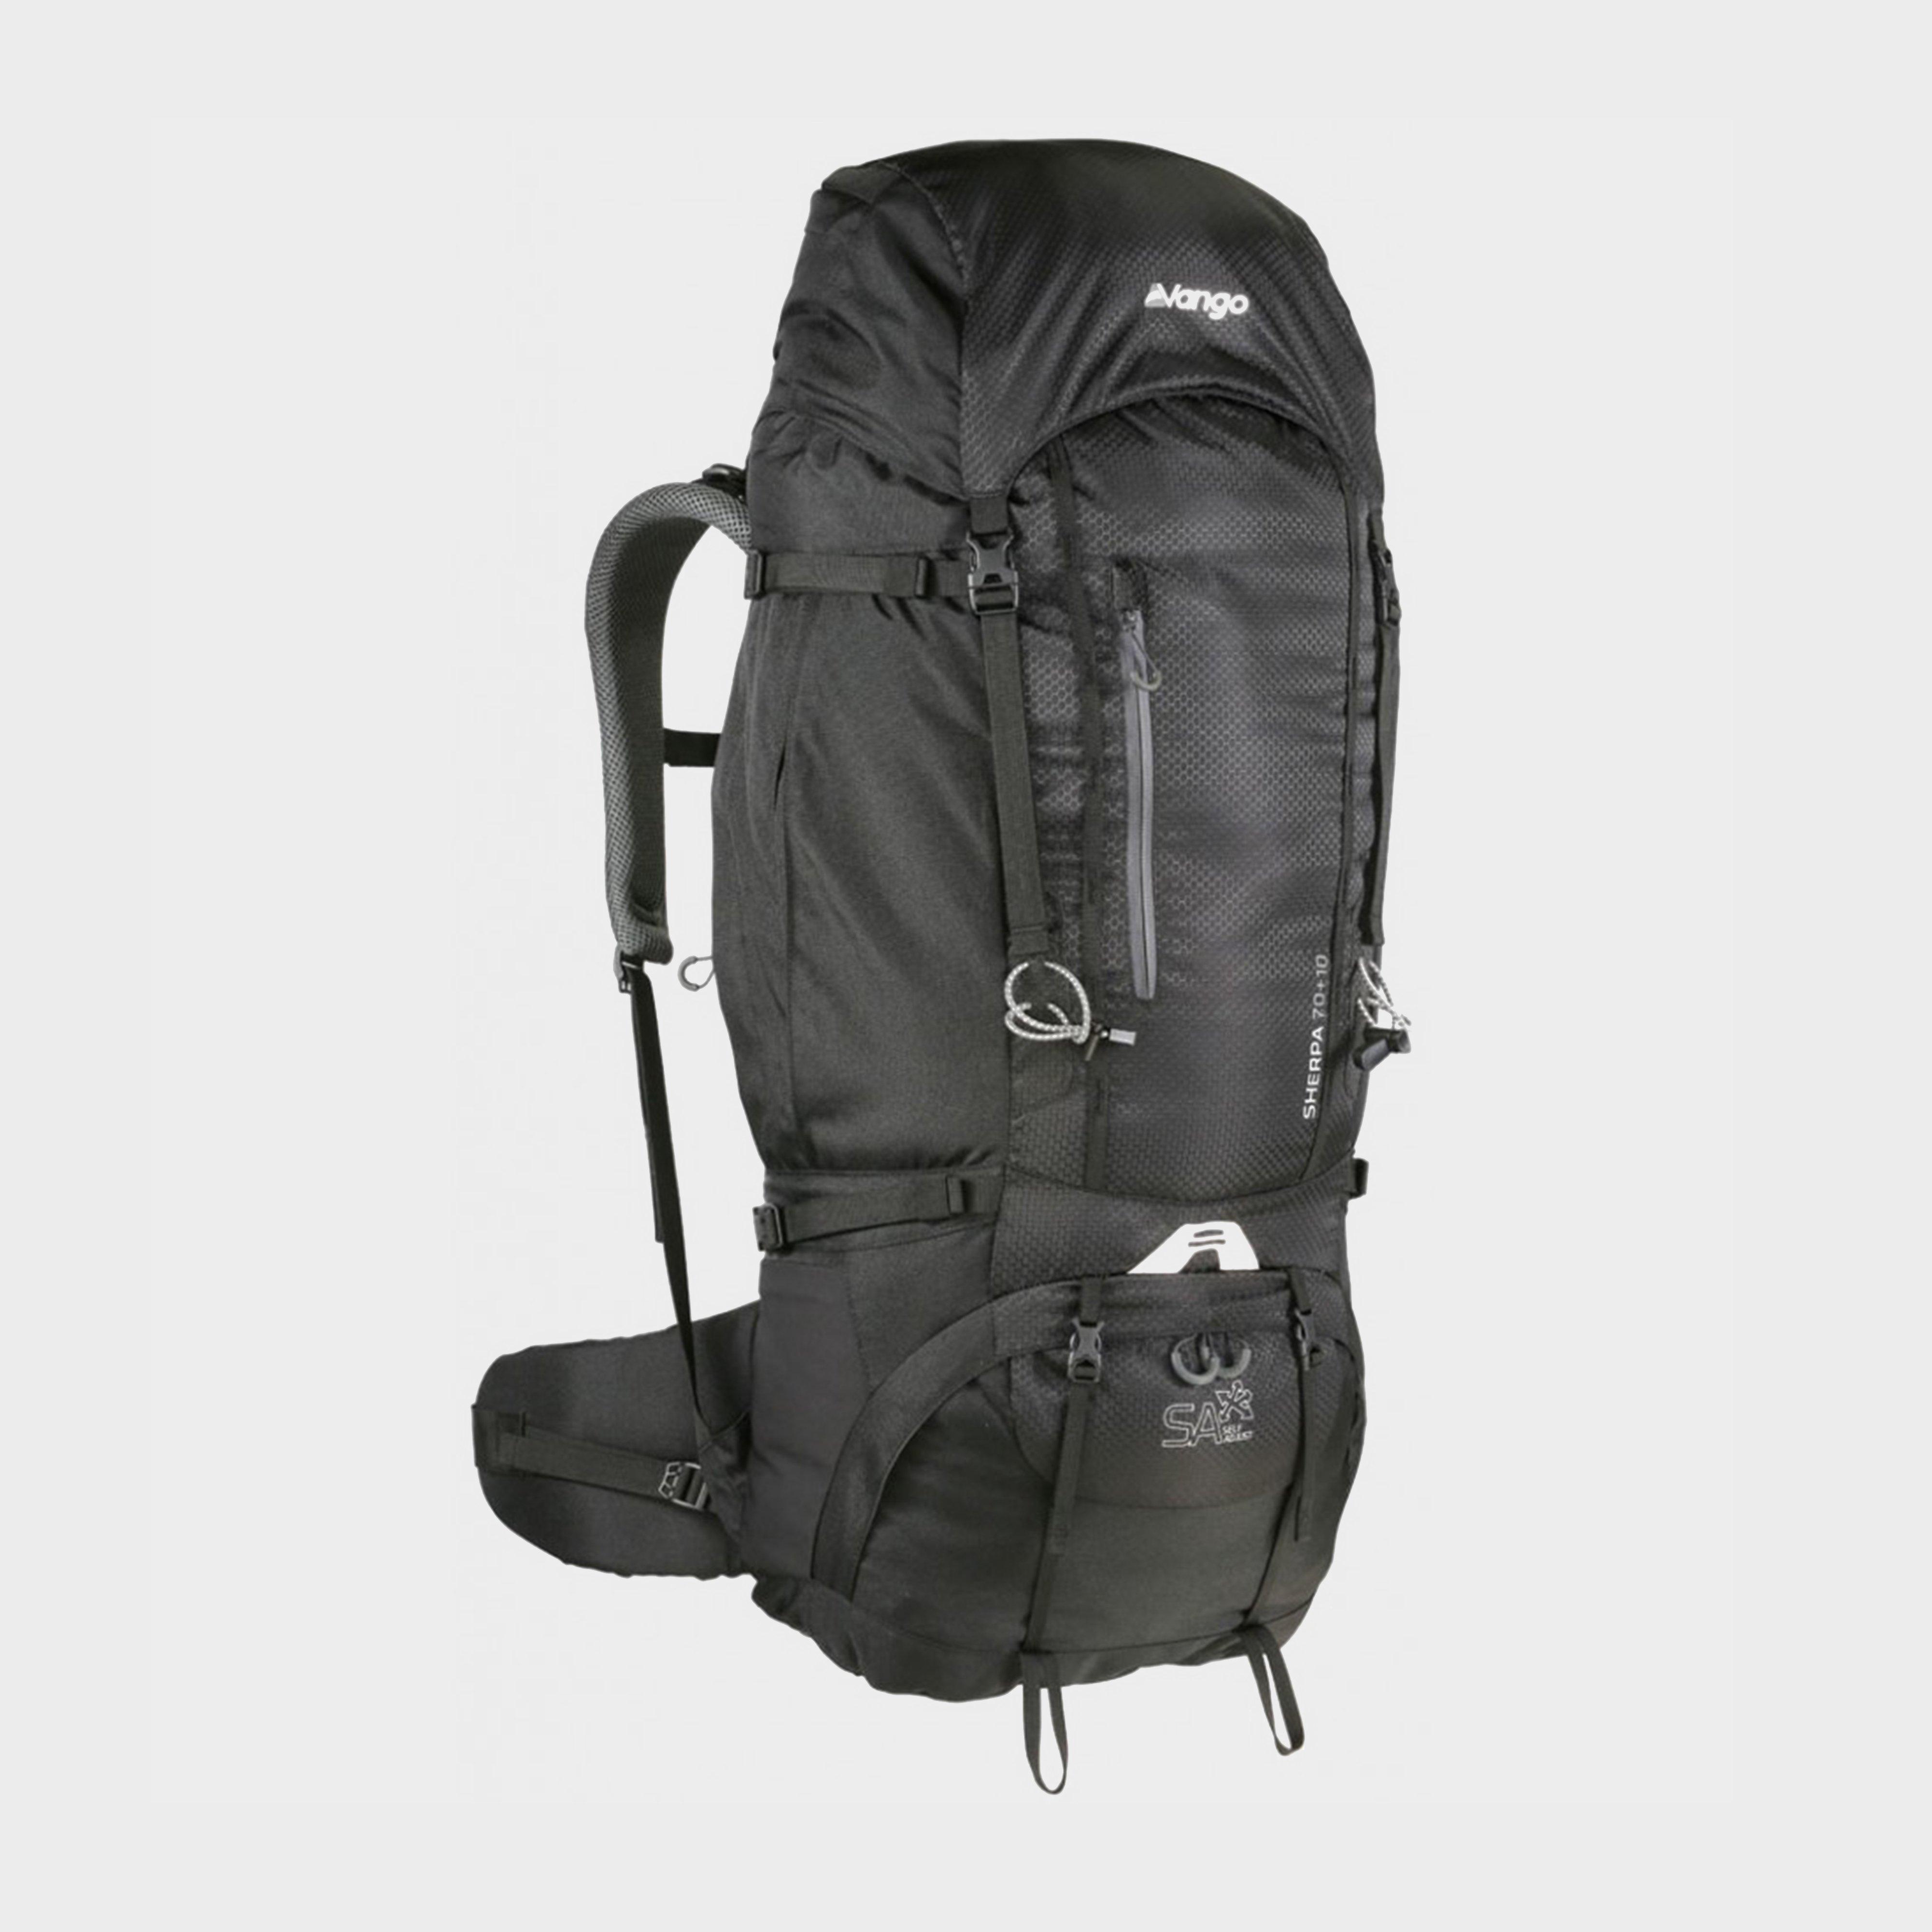 Vango Sherpa 70:80 Backpack - Black/blk  Black/blk